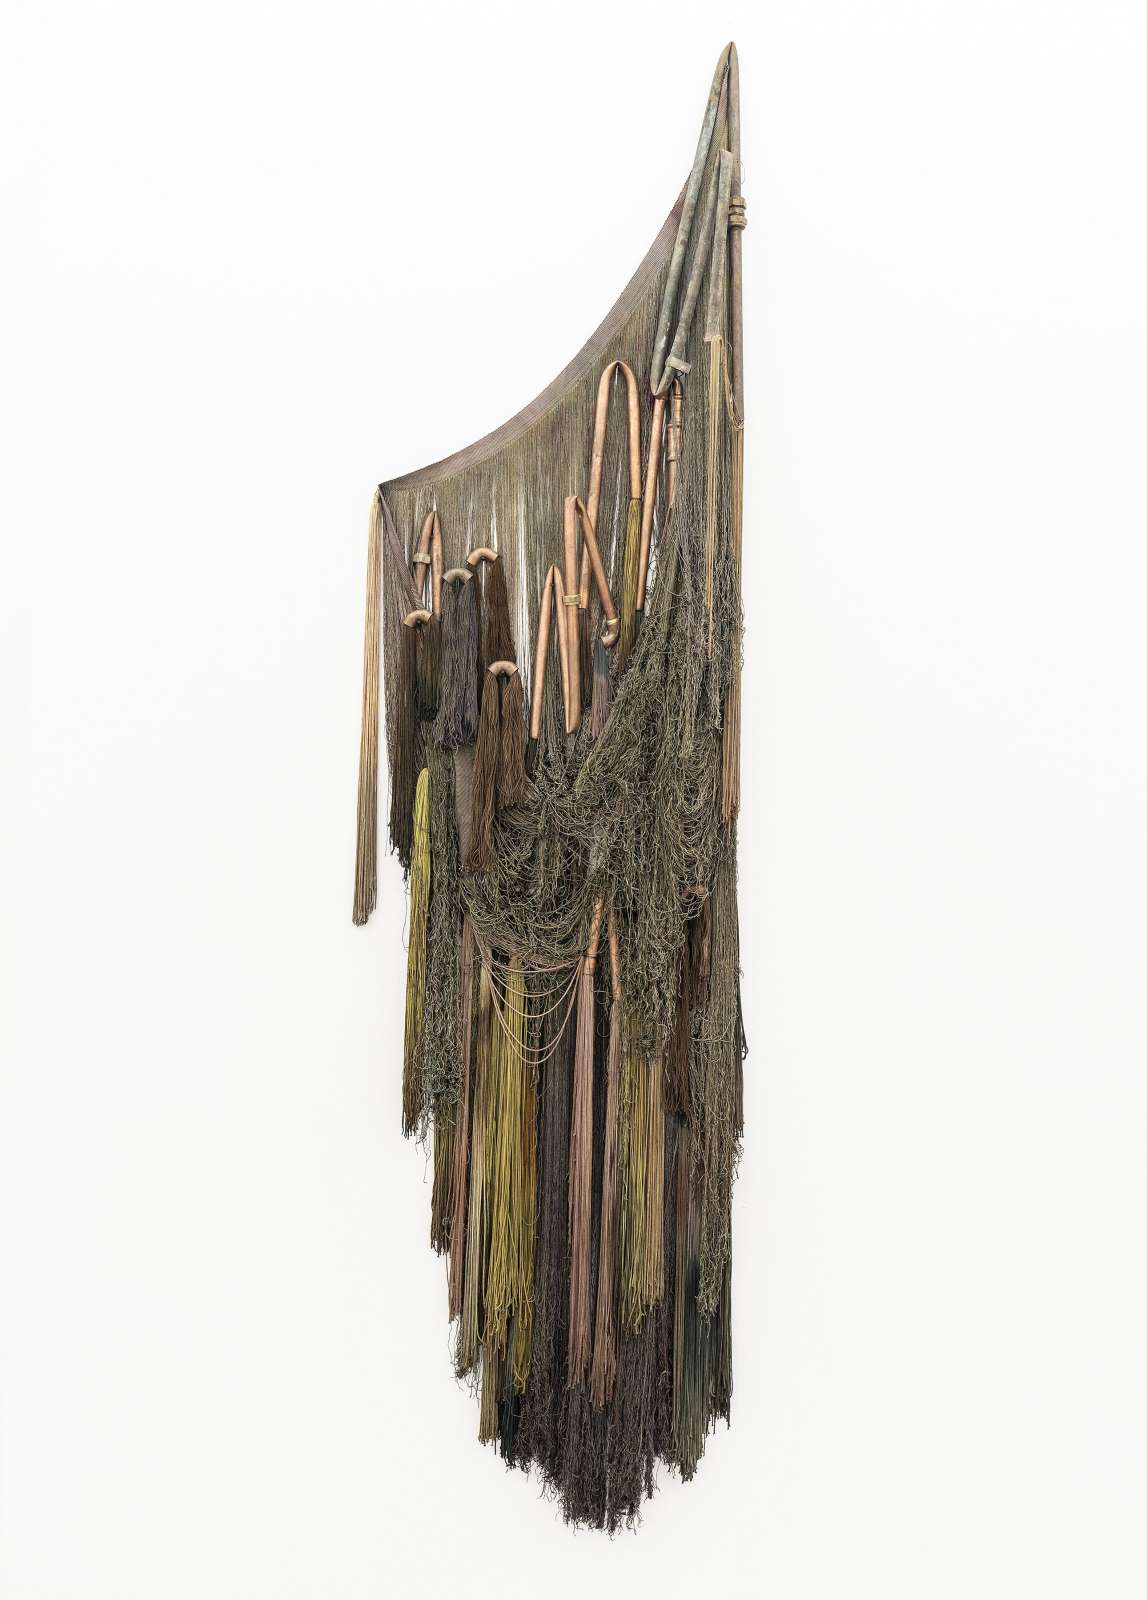 Nour Jaouda, Untitled, 2021. Hand-dyed cotton, Copper